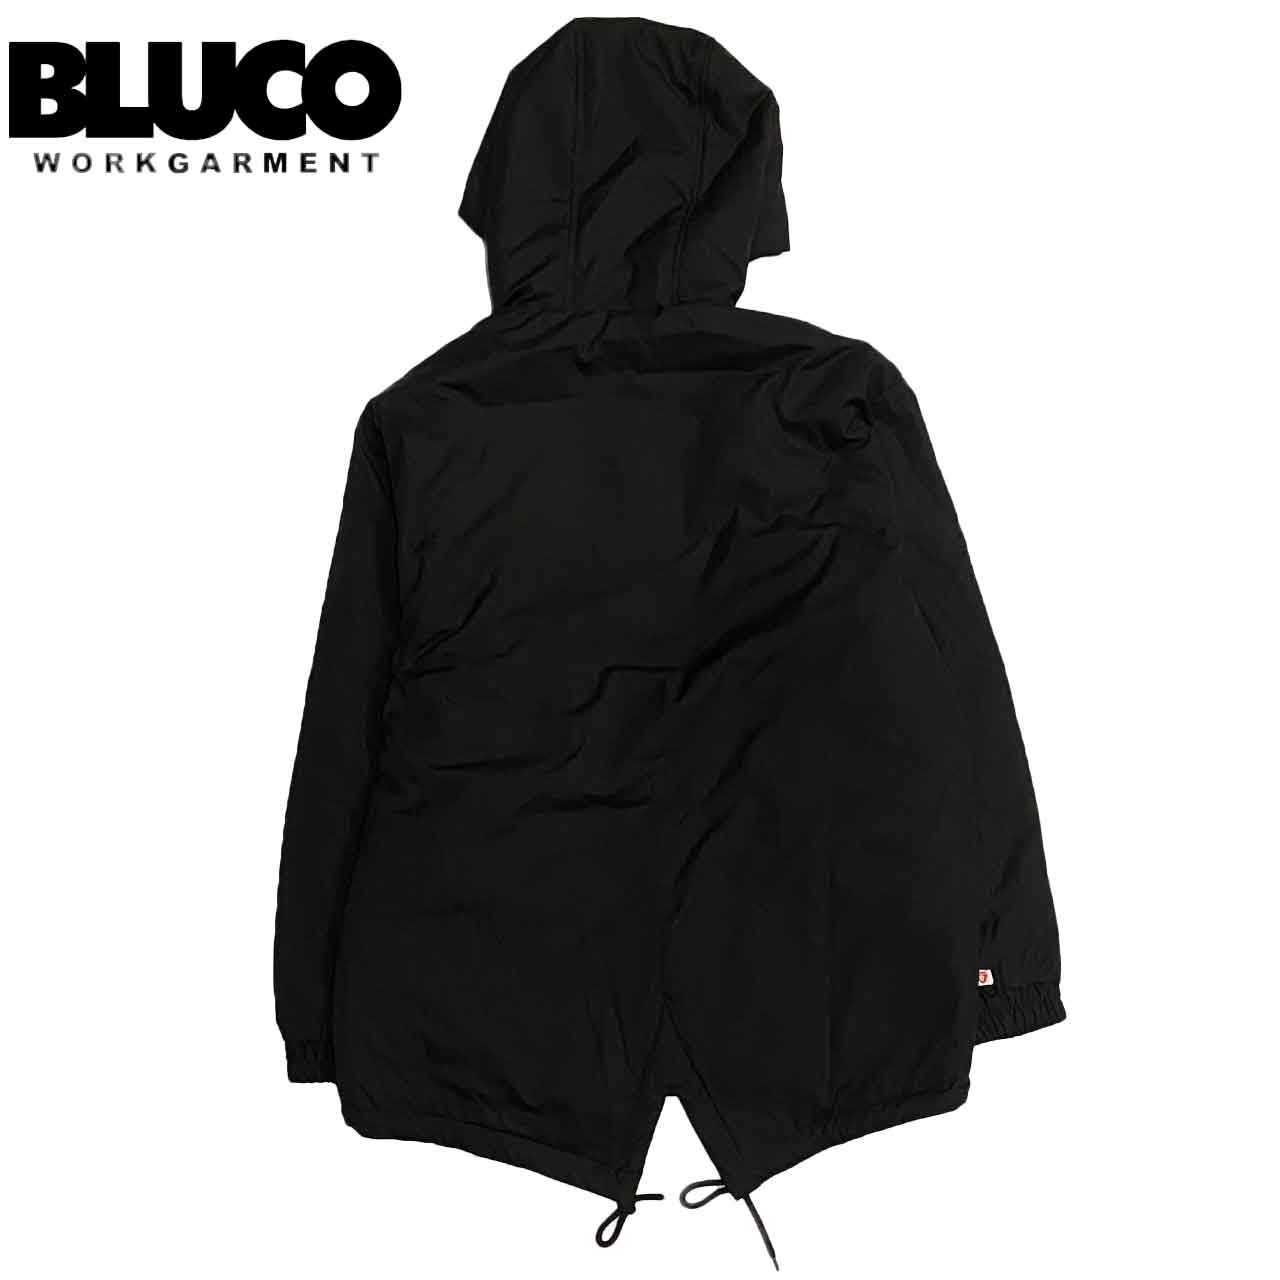 BLUCO ブルコ OL-075-022 MOD'S COAT モッズコート